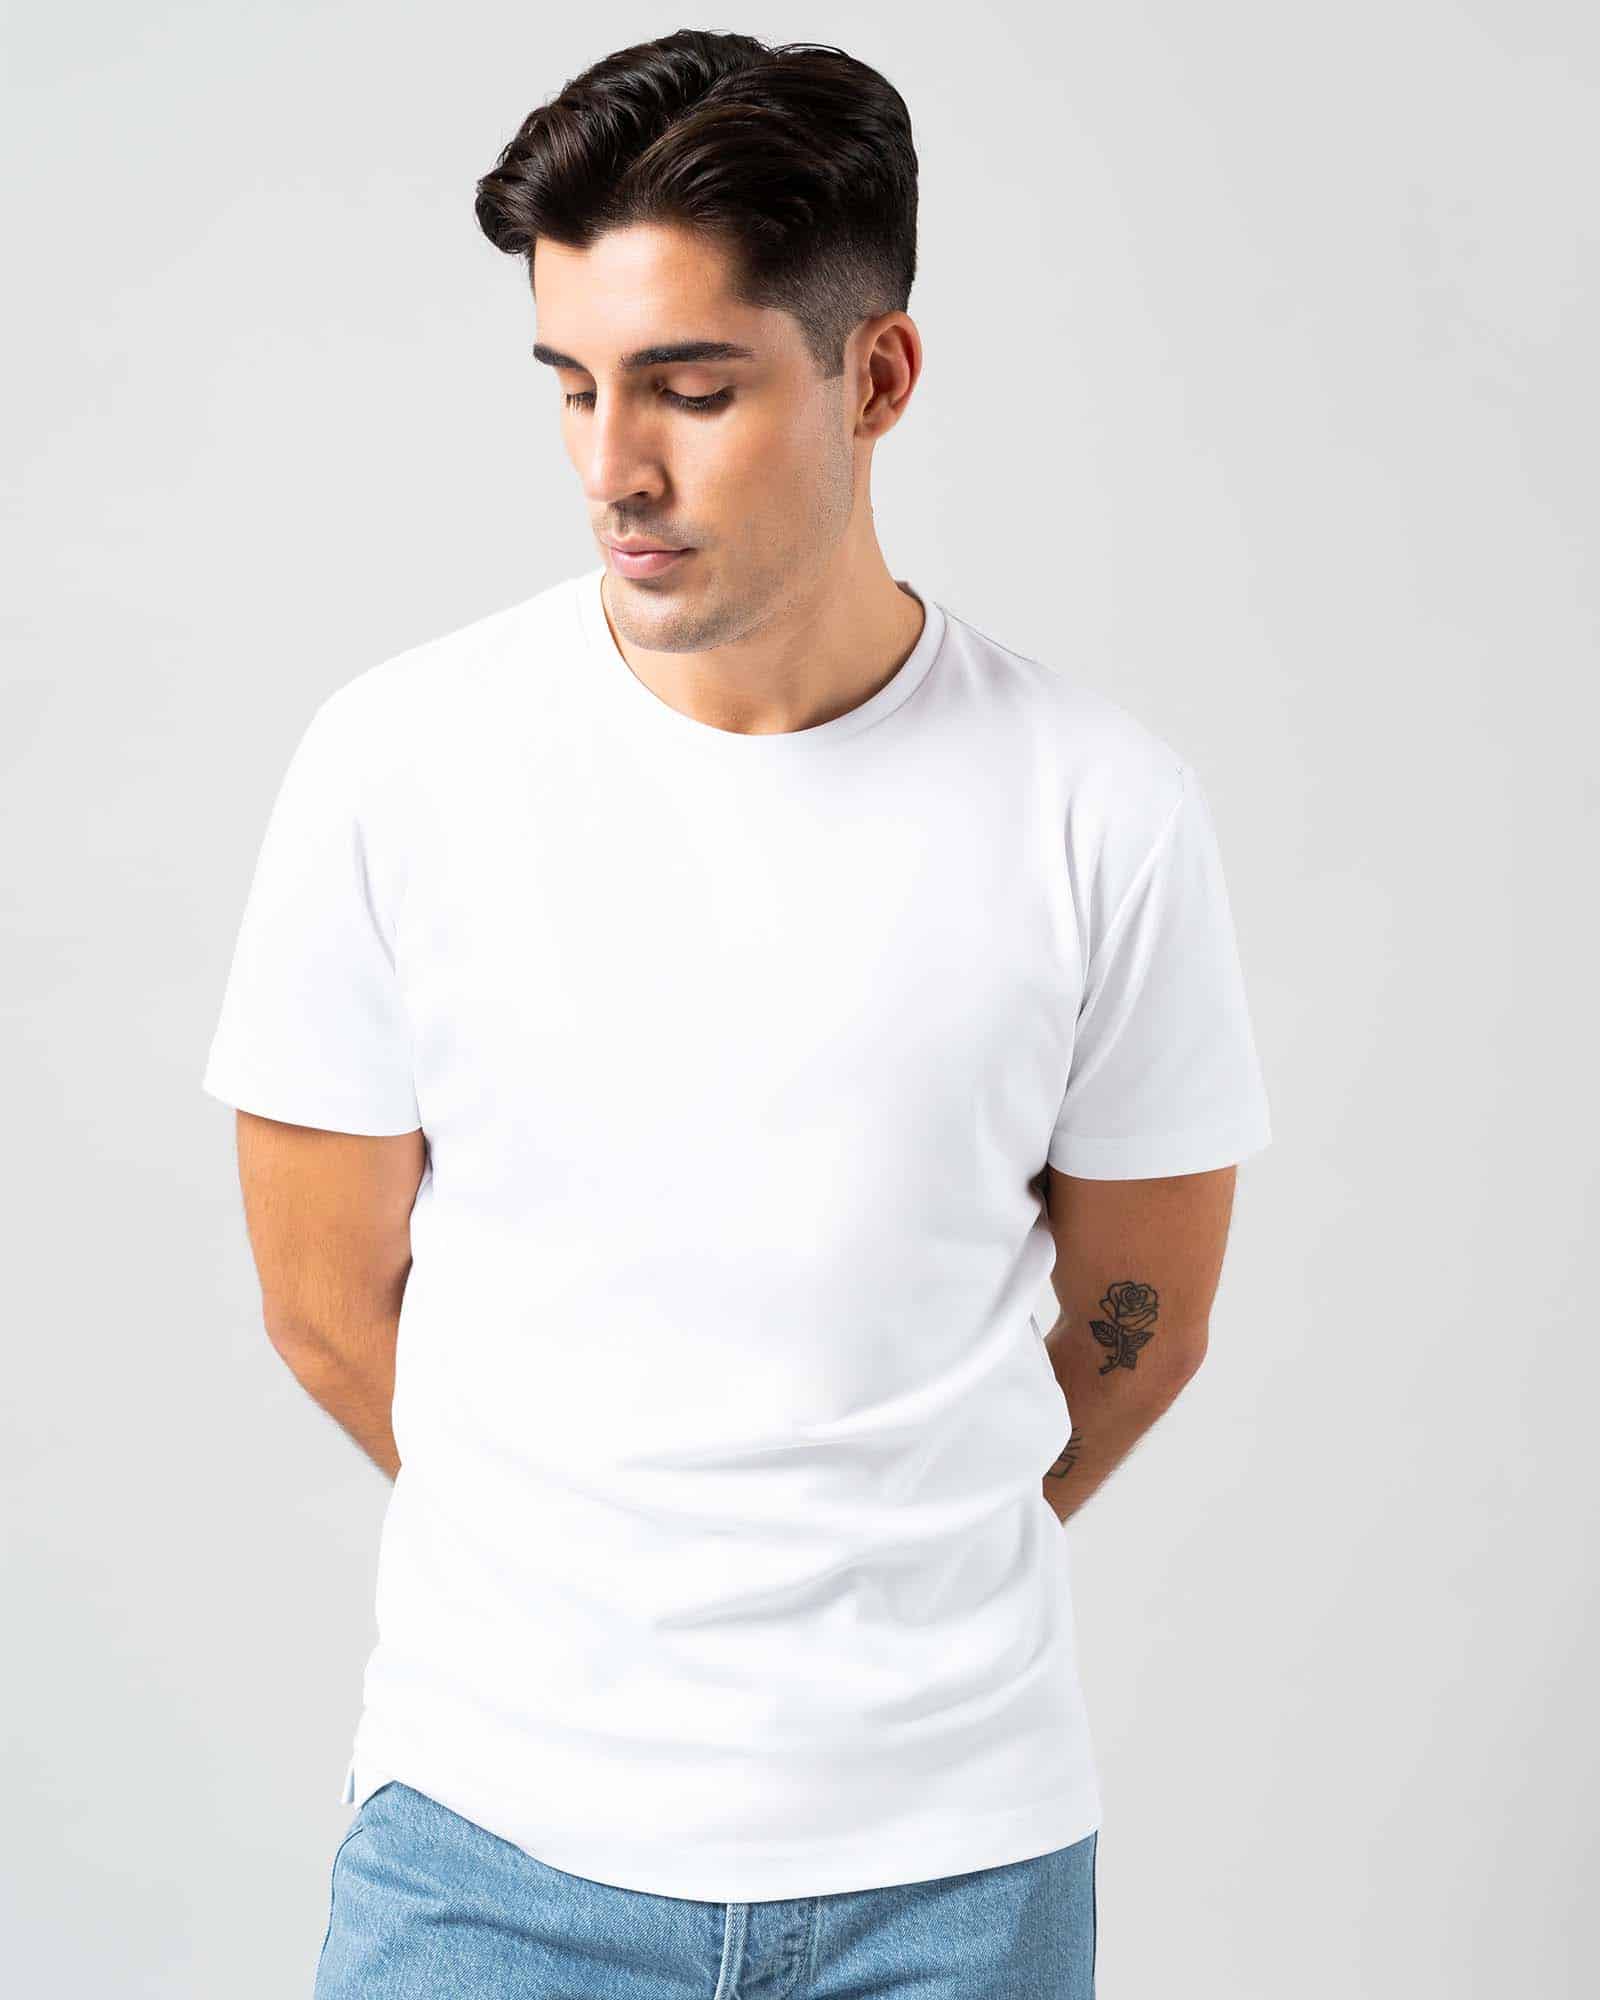 T-shirt supima cotton white image 1